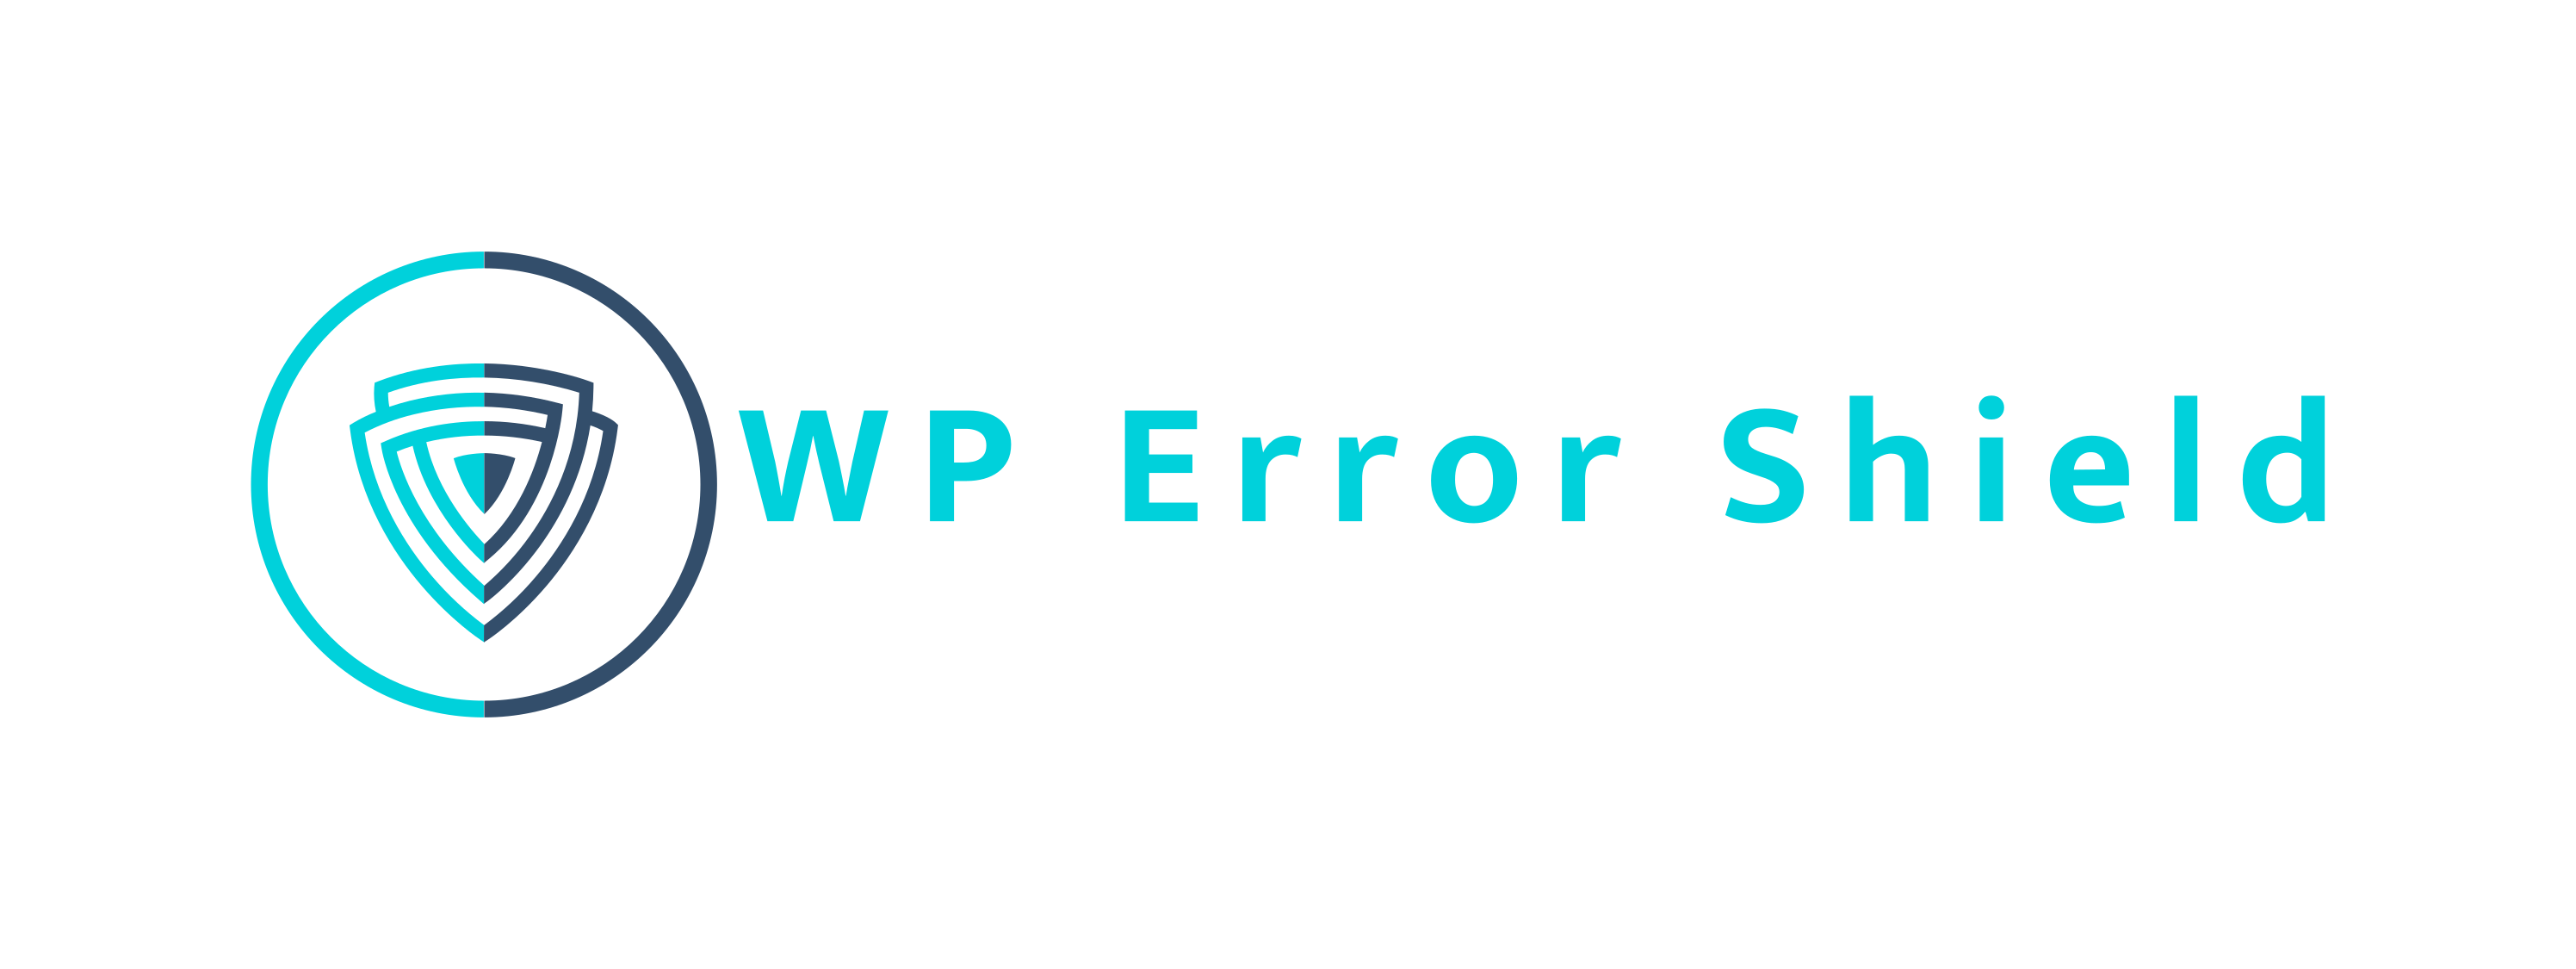 WP Error Shield